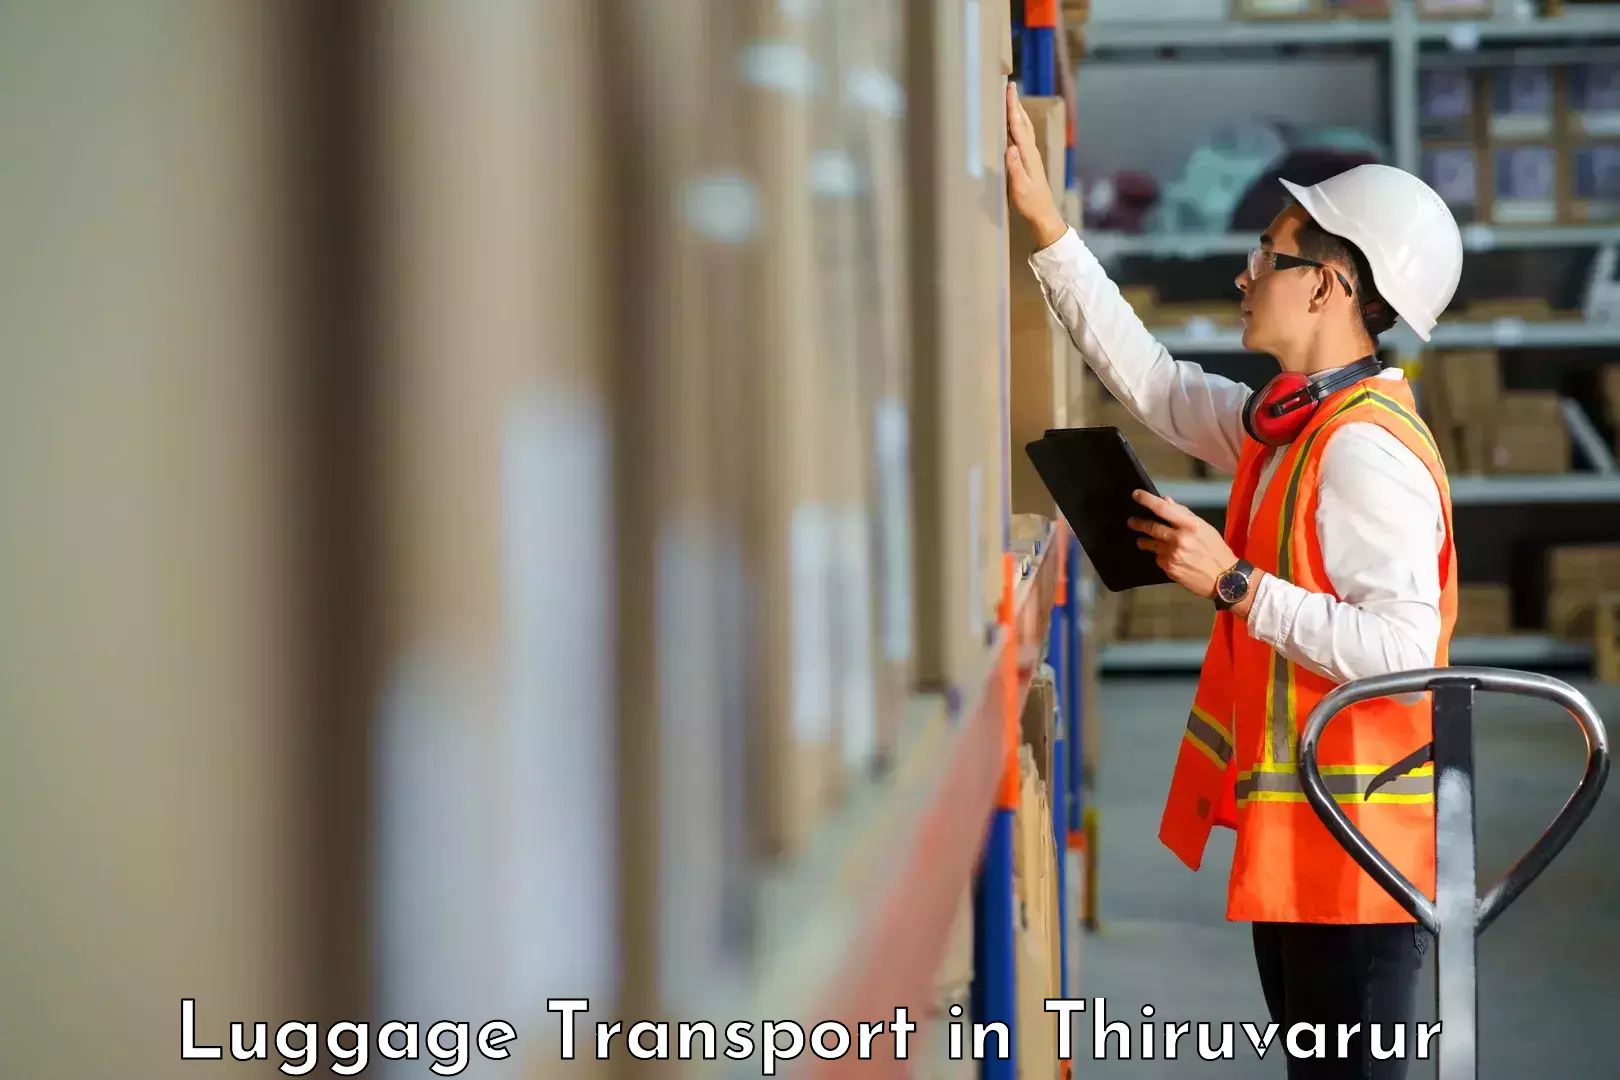 Baggage transport services in Thiruvarur